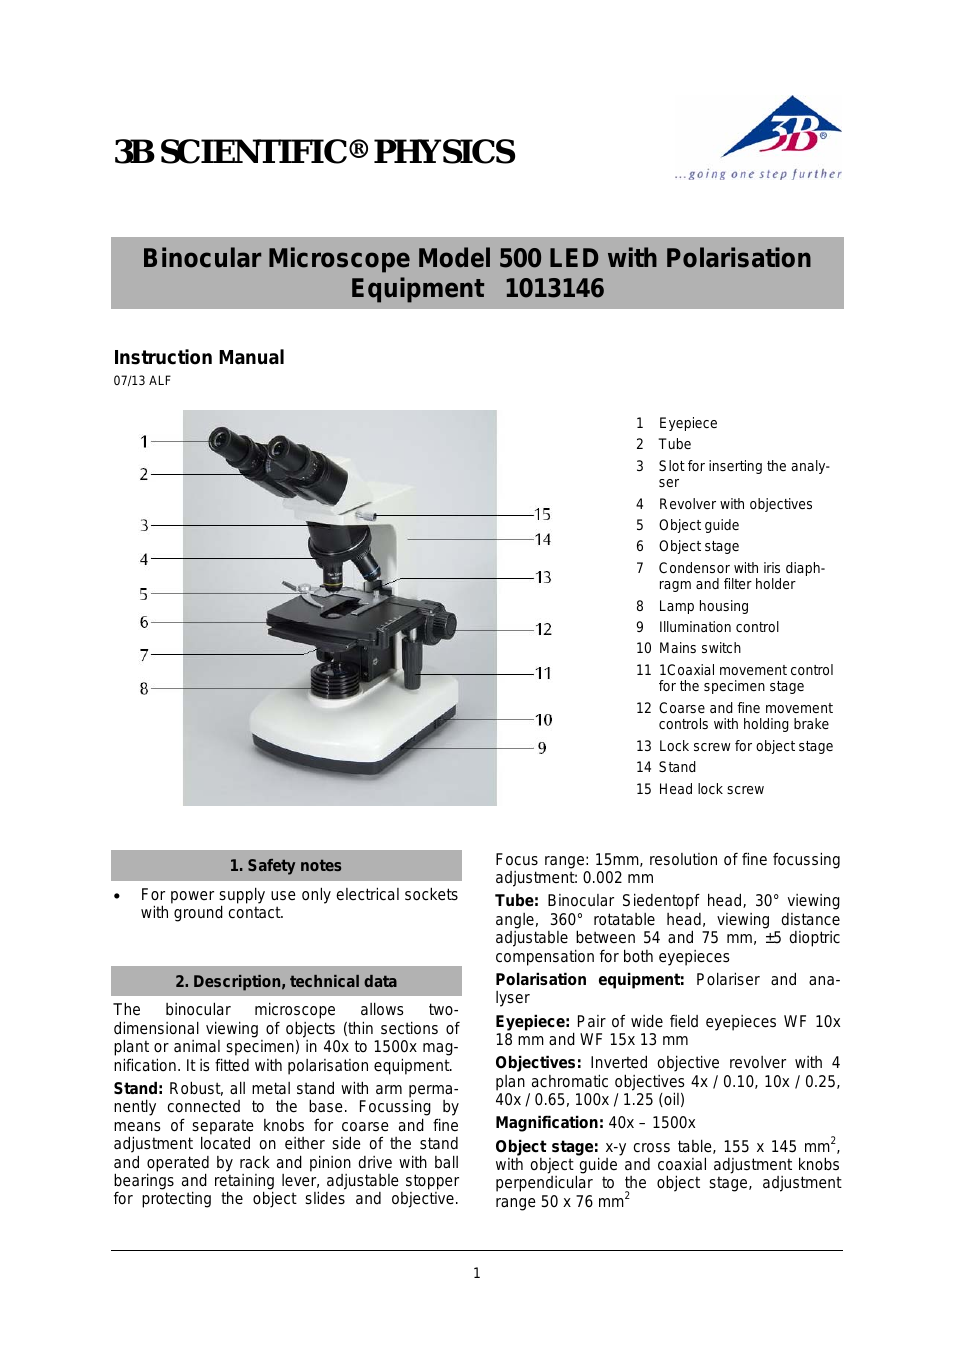 Binocular Microscope Model 500 LED with Polarisation Equipment